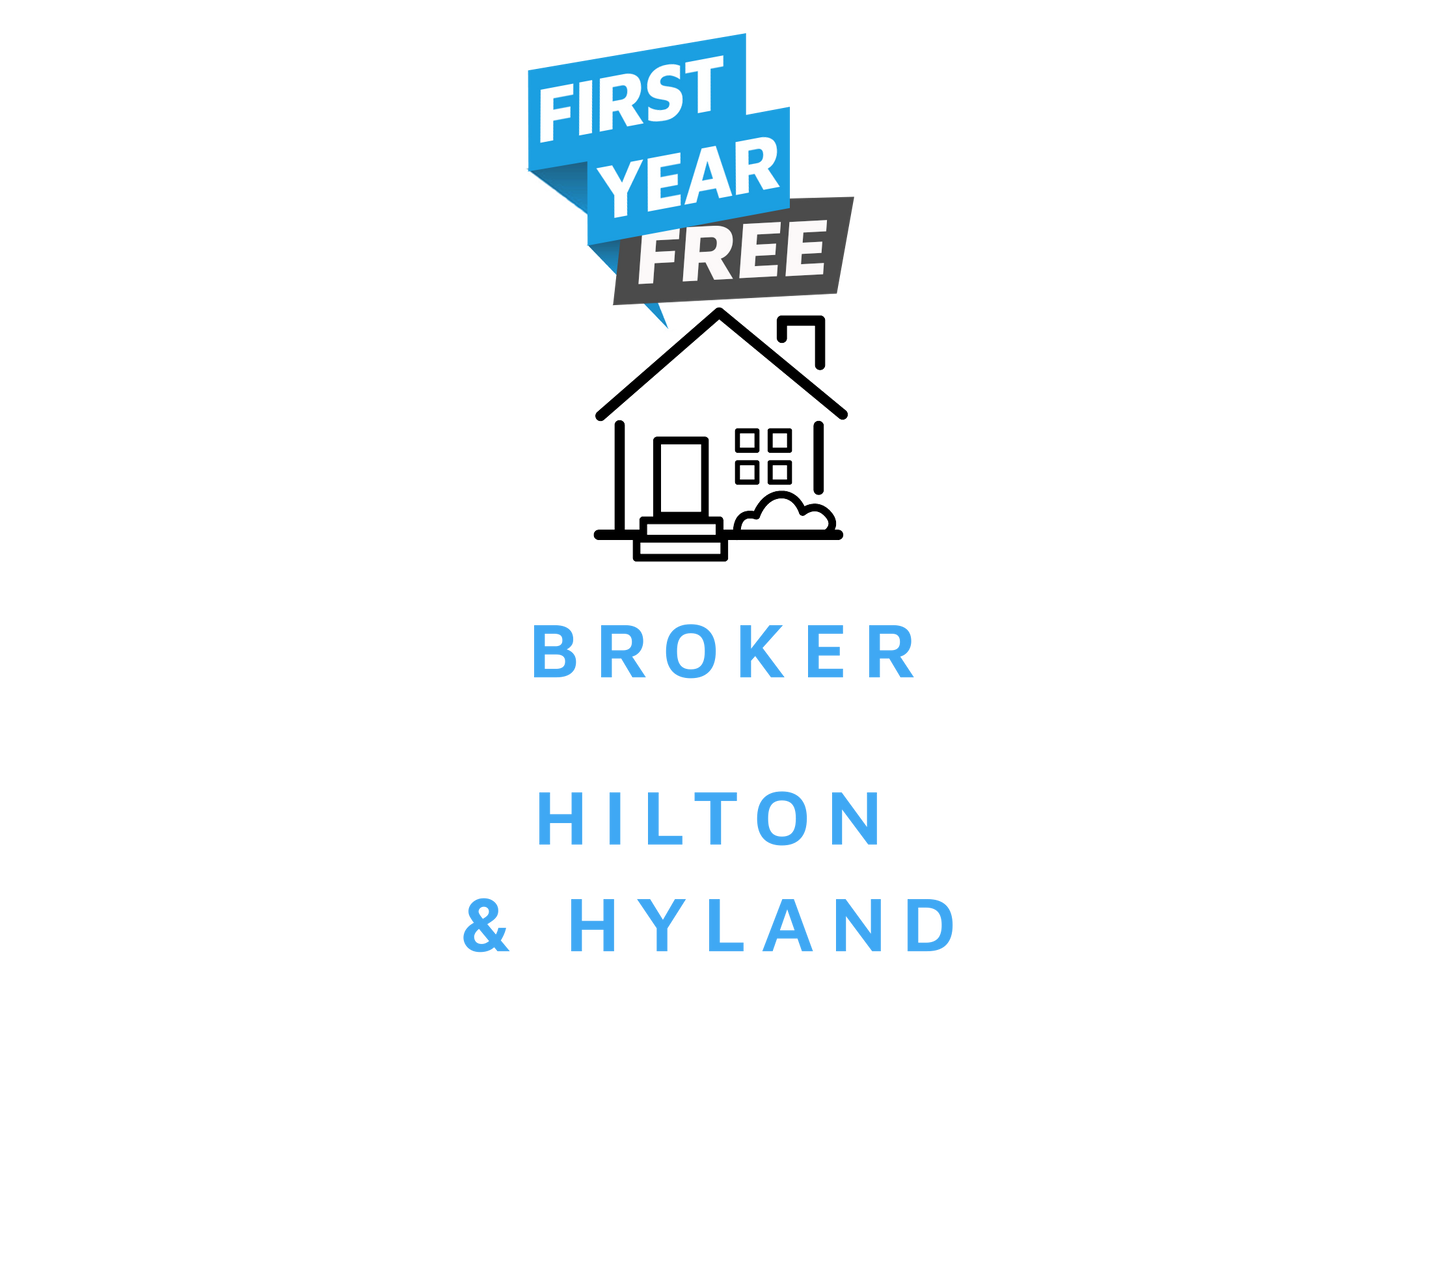 FIRST YEAR FREE - Broker - Hilton & Hyland - use code HH29